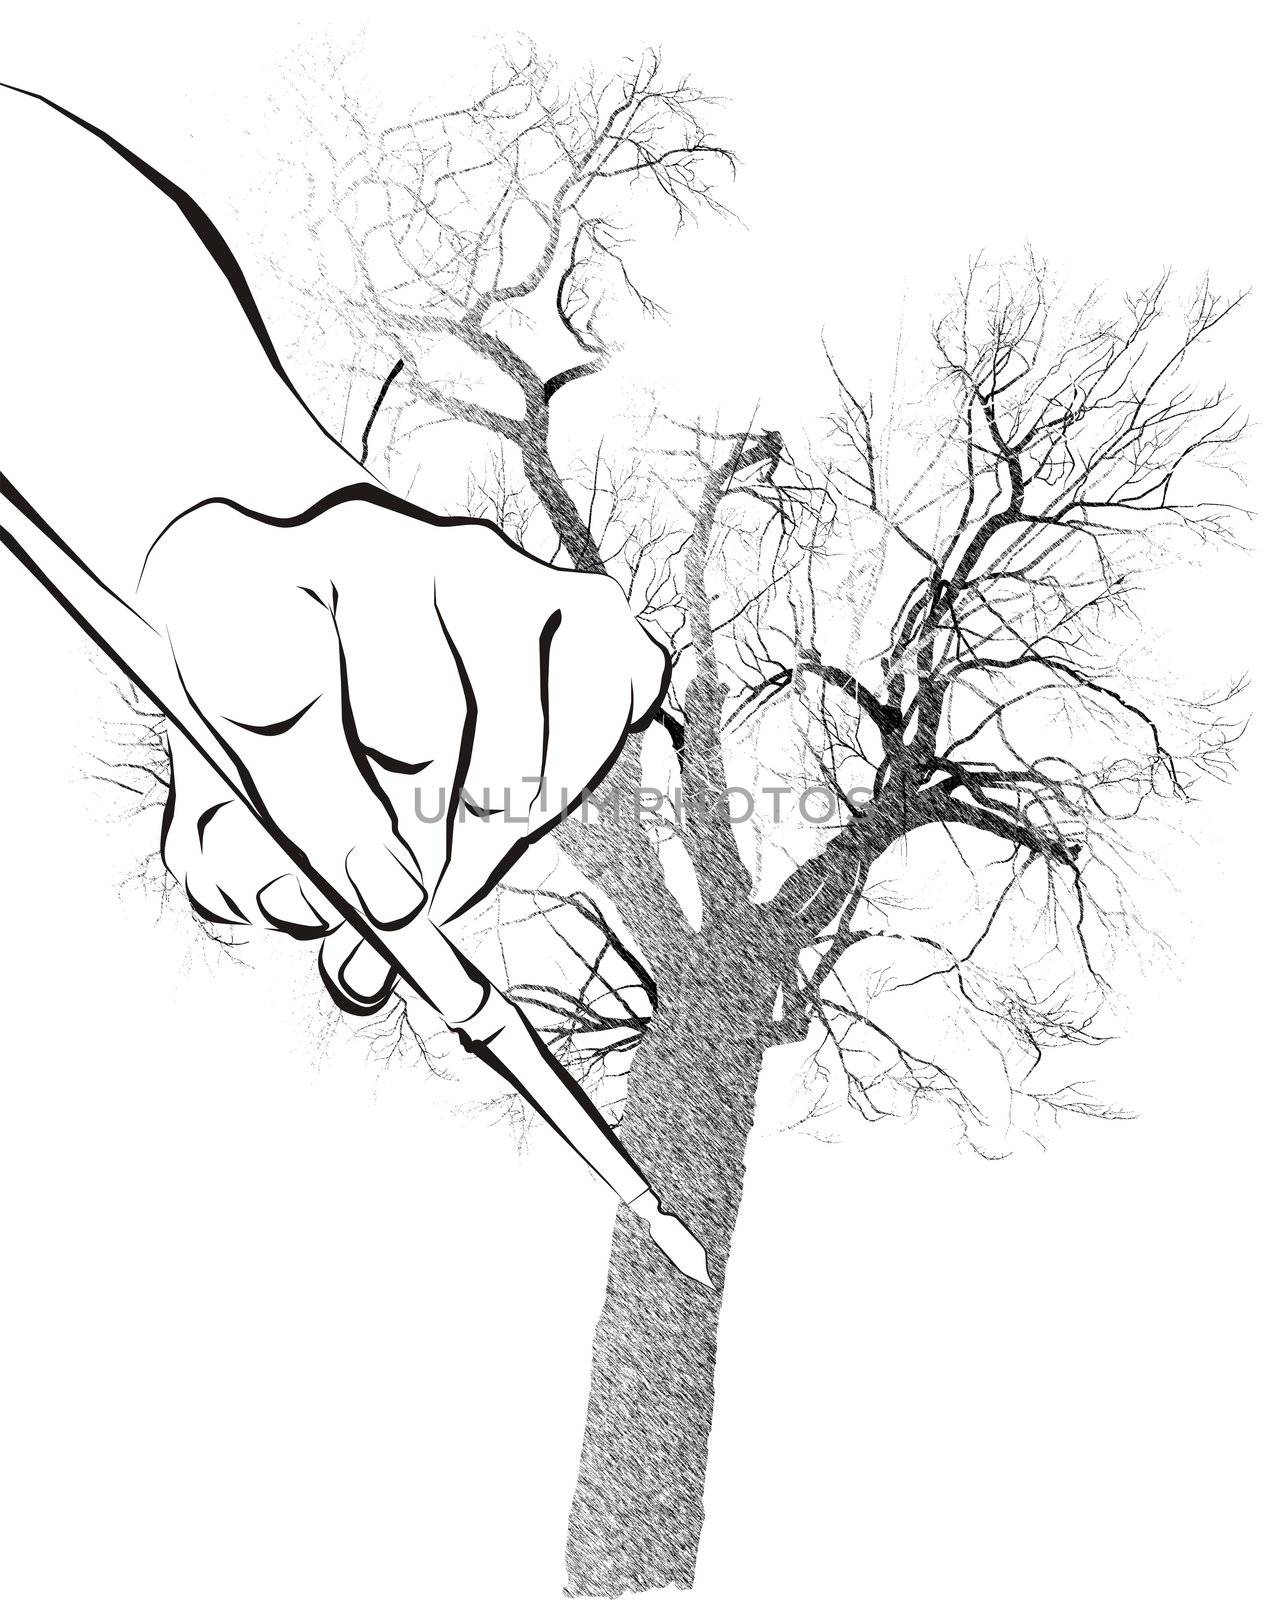 Tree illustration pen by ard1